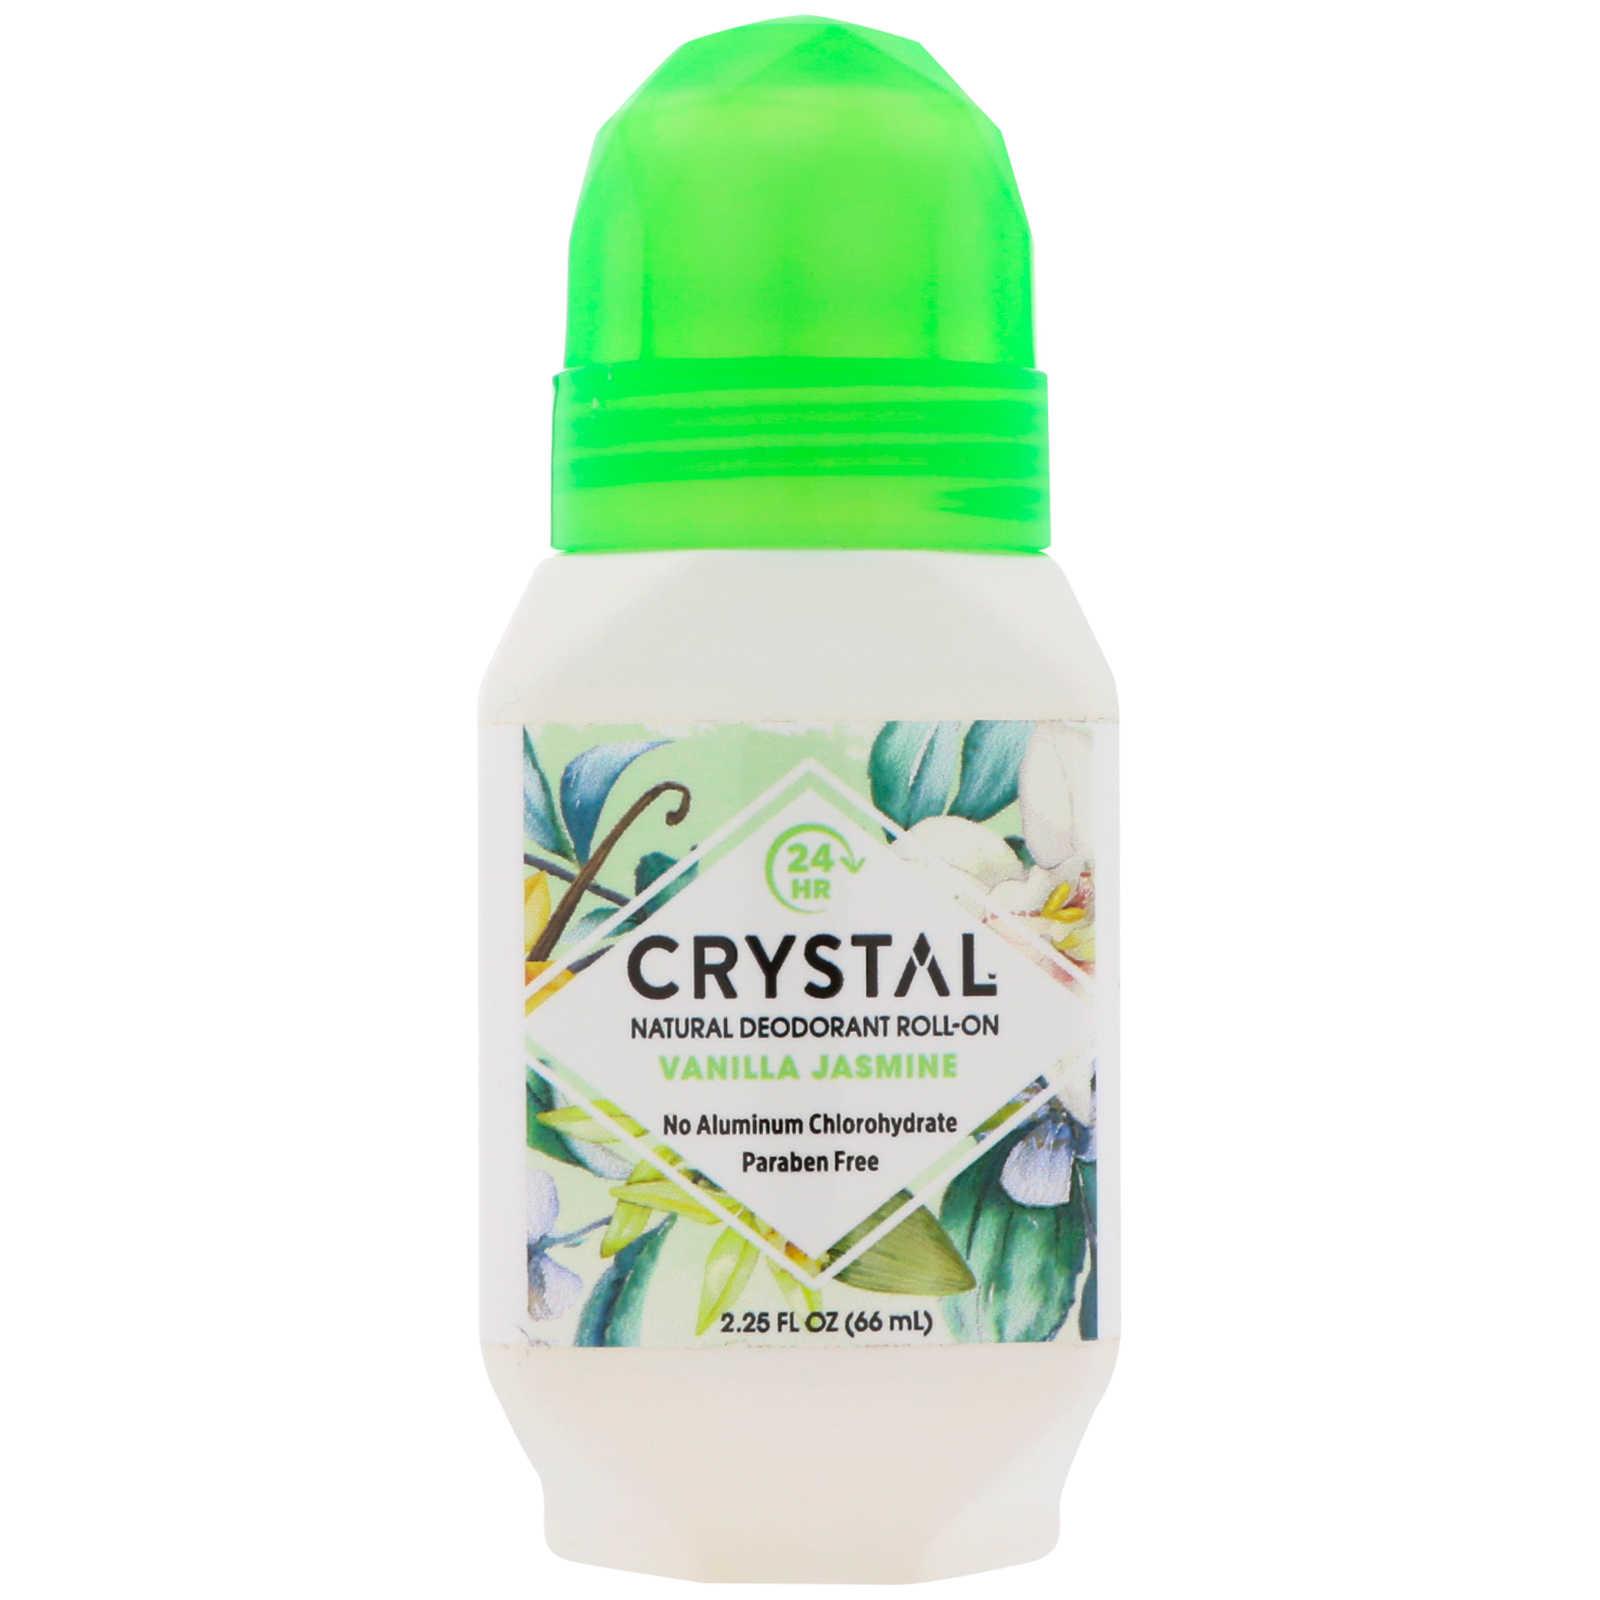 Crystal Essence Body Deodorant - Vanilla Jasmine